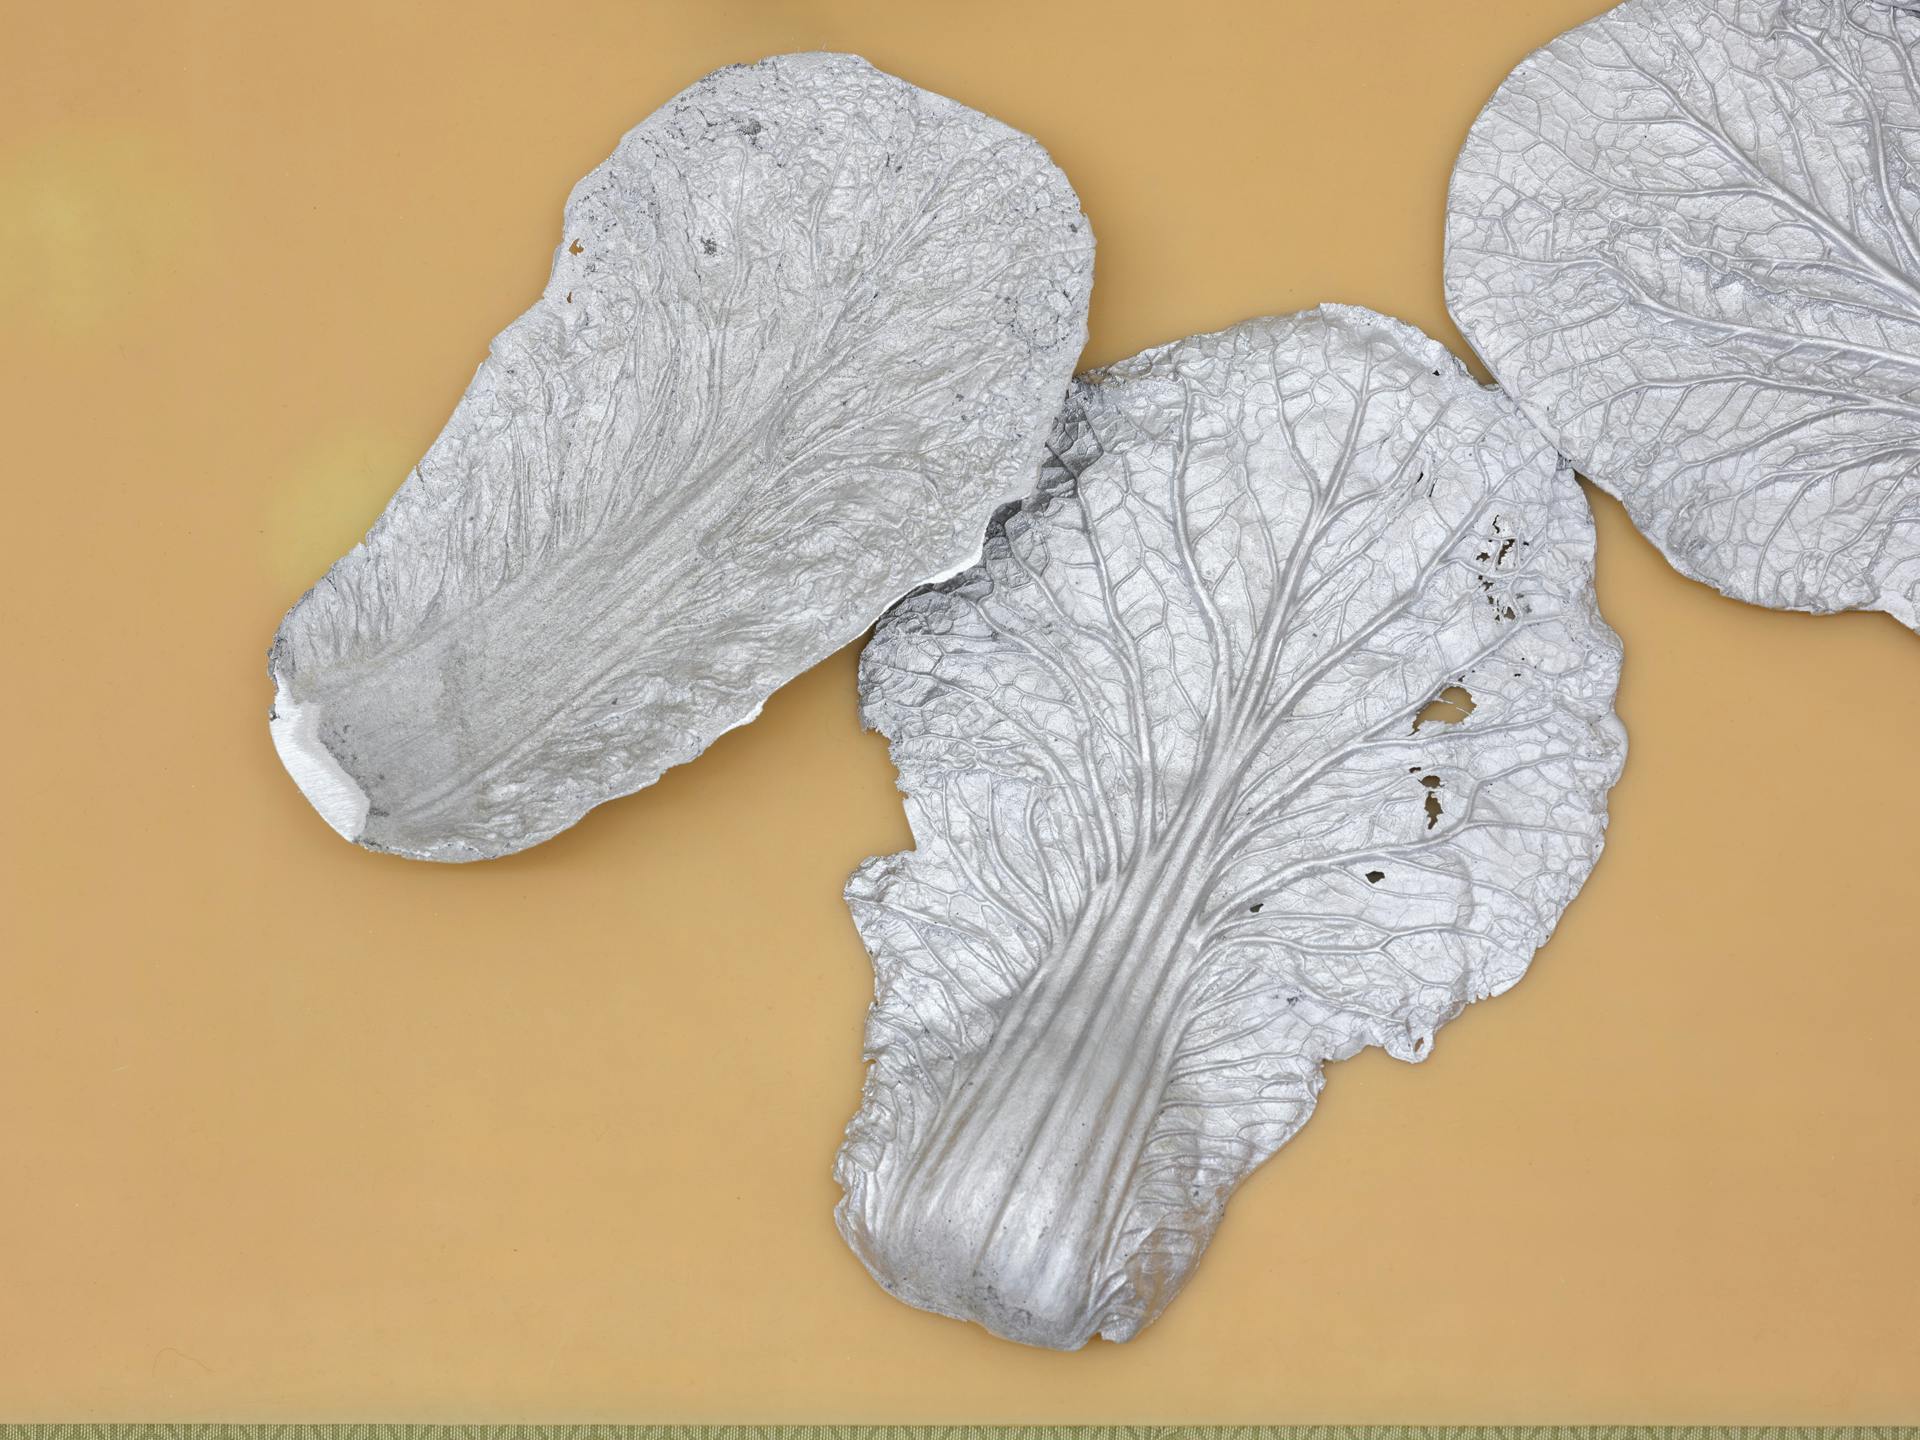 Detail of cast aluminium cabbage sculptures sitting on a flat tatami mat. 